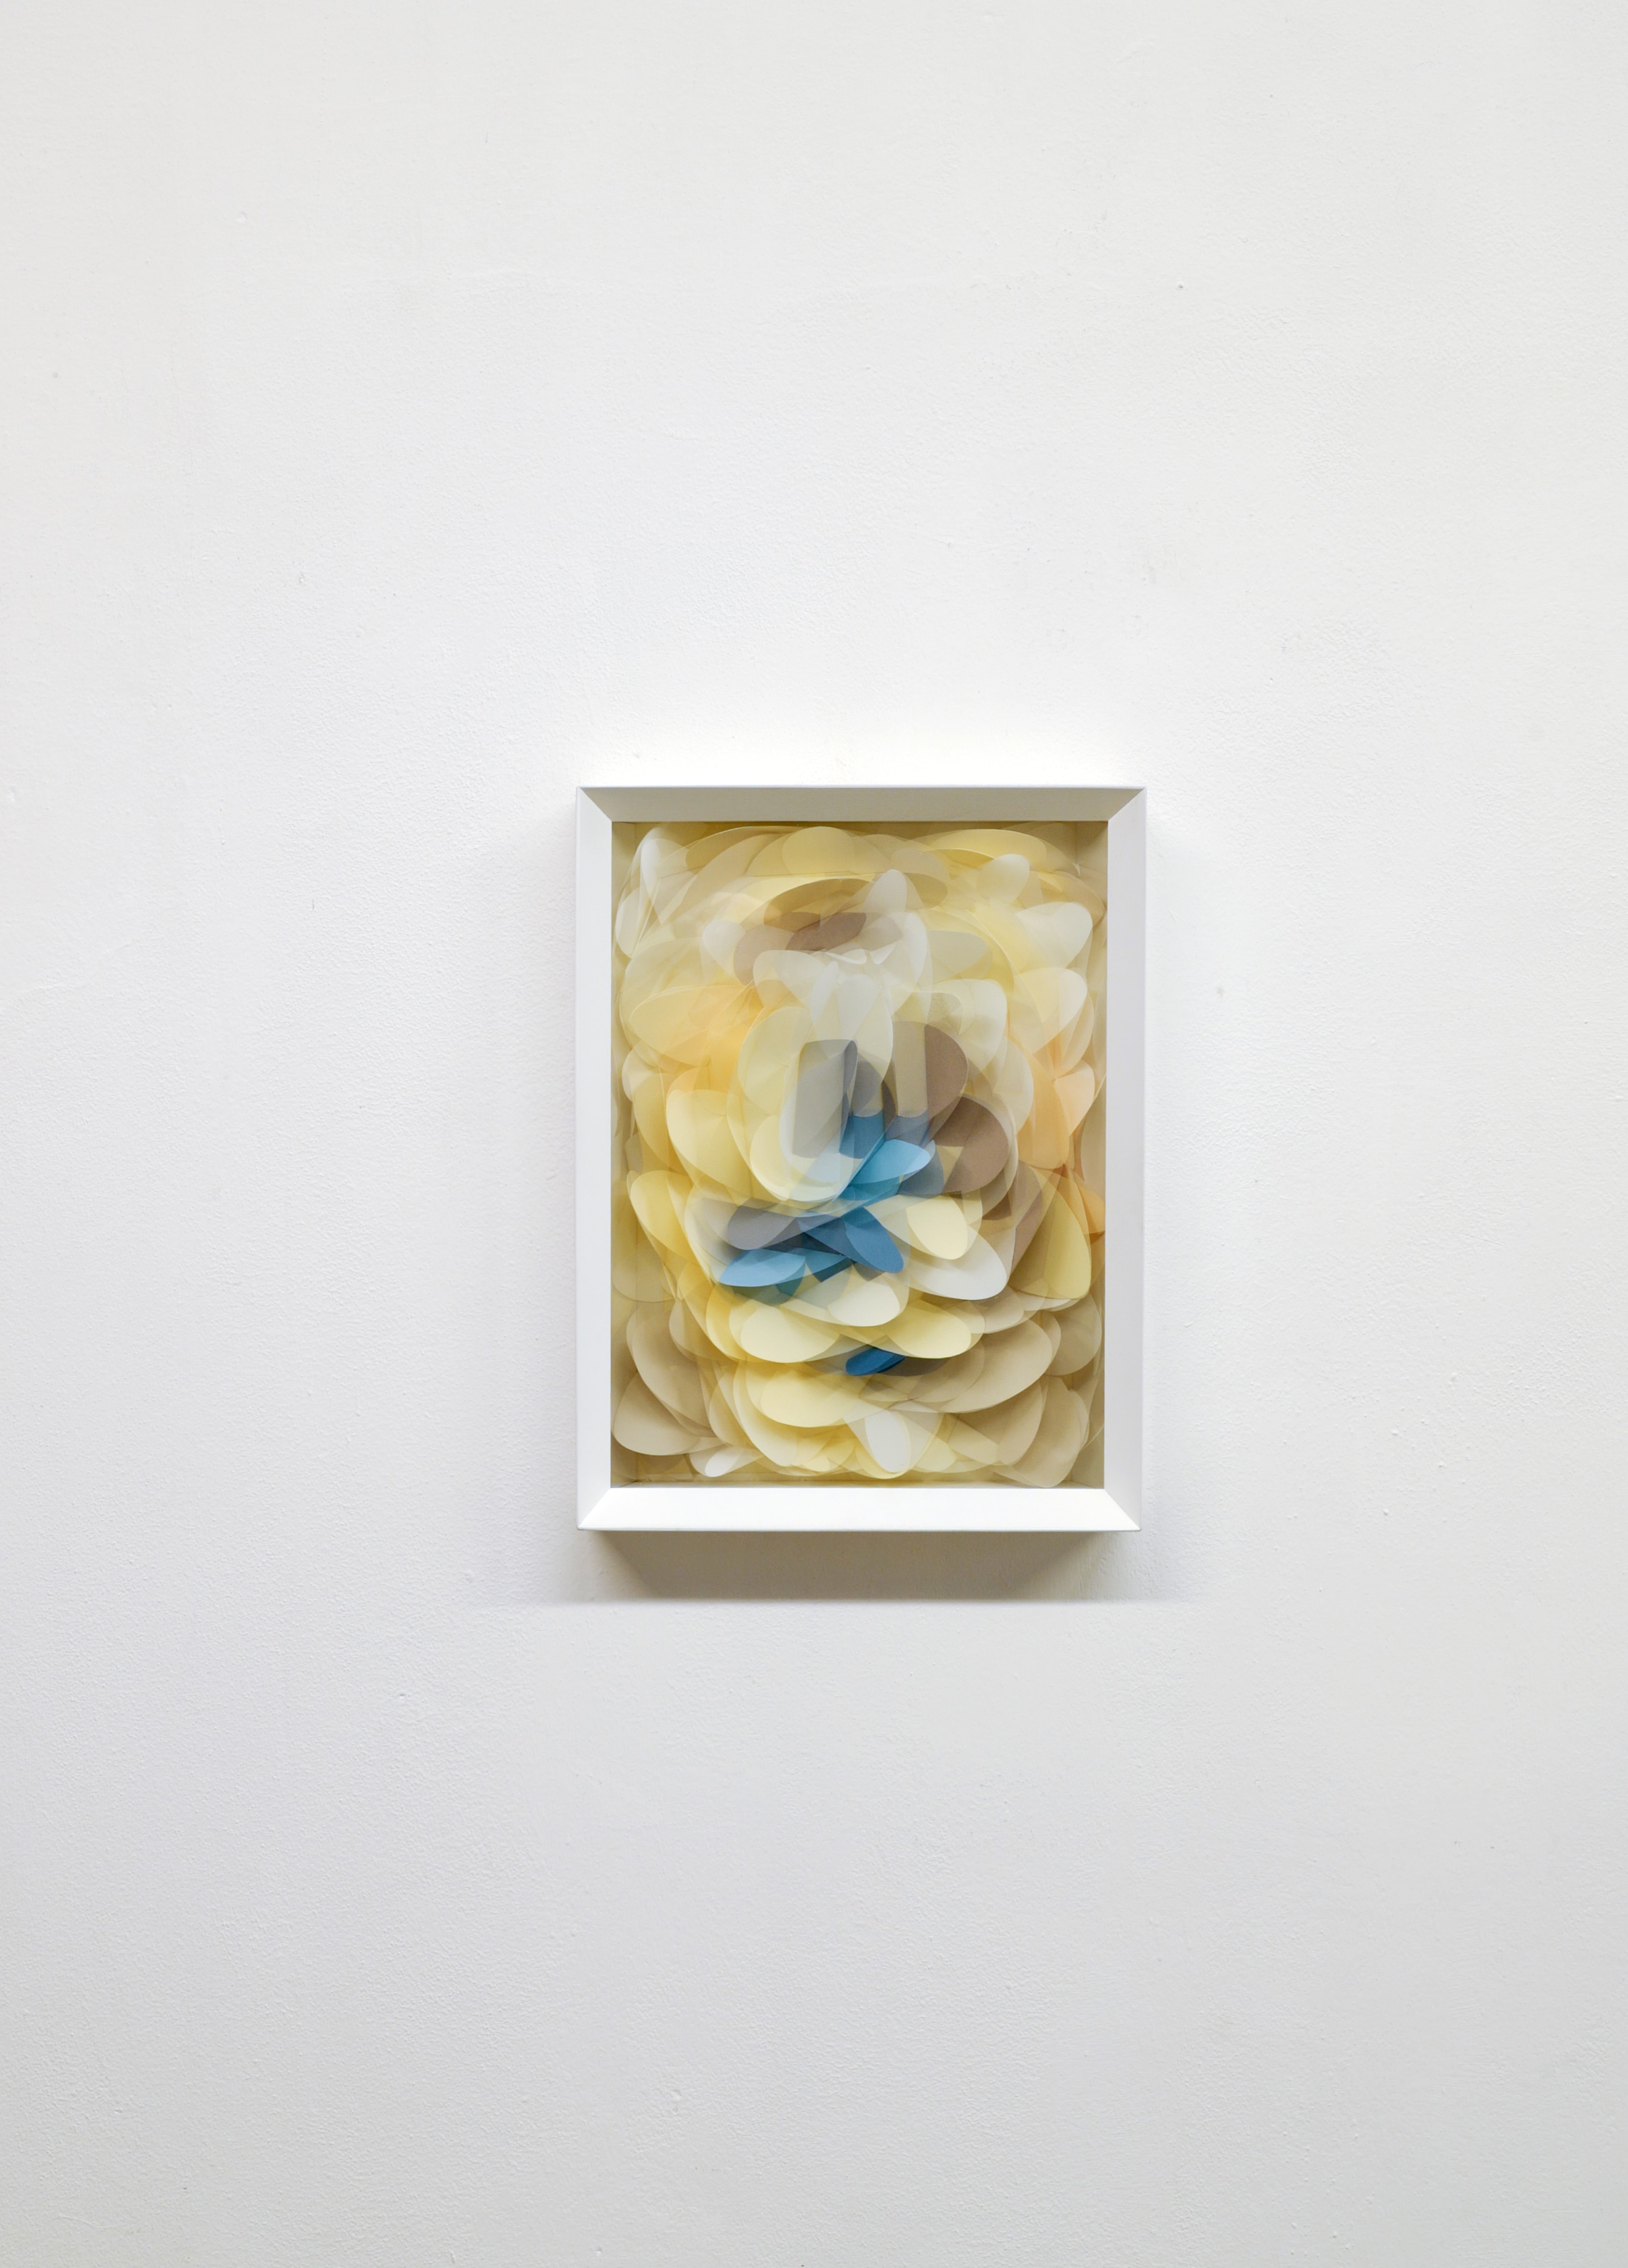 Maurizio Donzelli, Mirror, 2017, 52 x 40 x 7,5 cm, Mix media in box